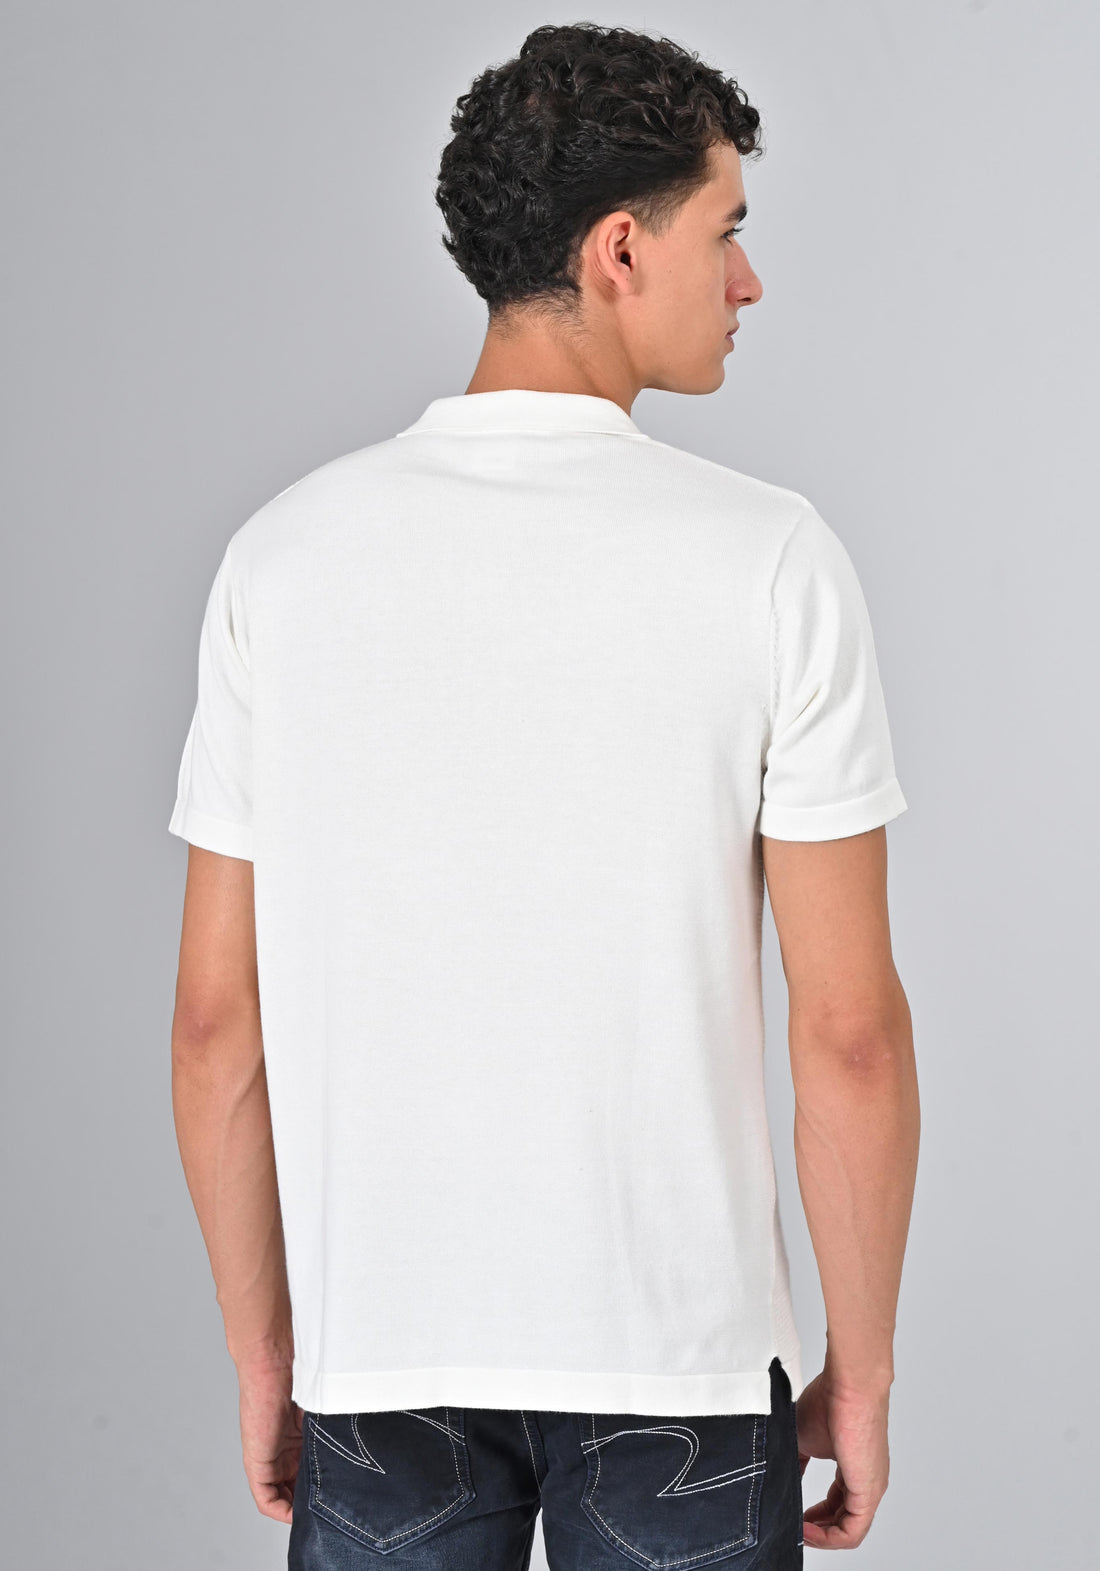 Nativebull White Color Cotton Half Sleeve Collar Neck T Shirt